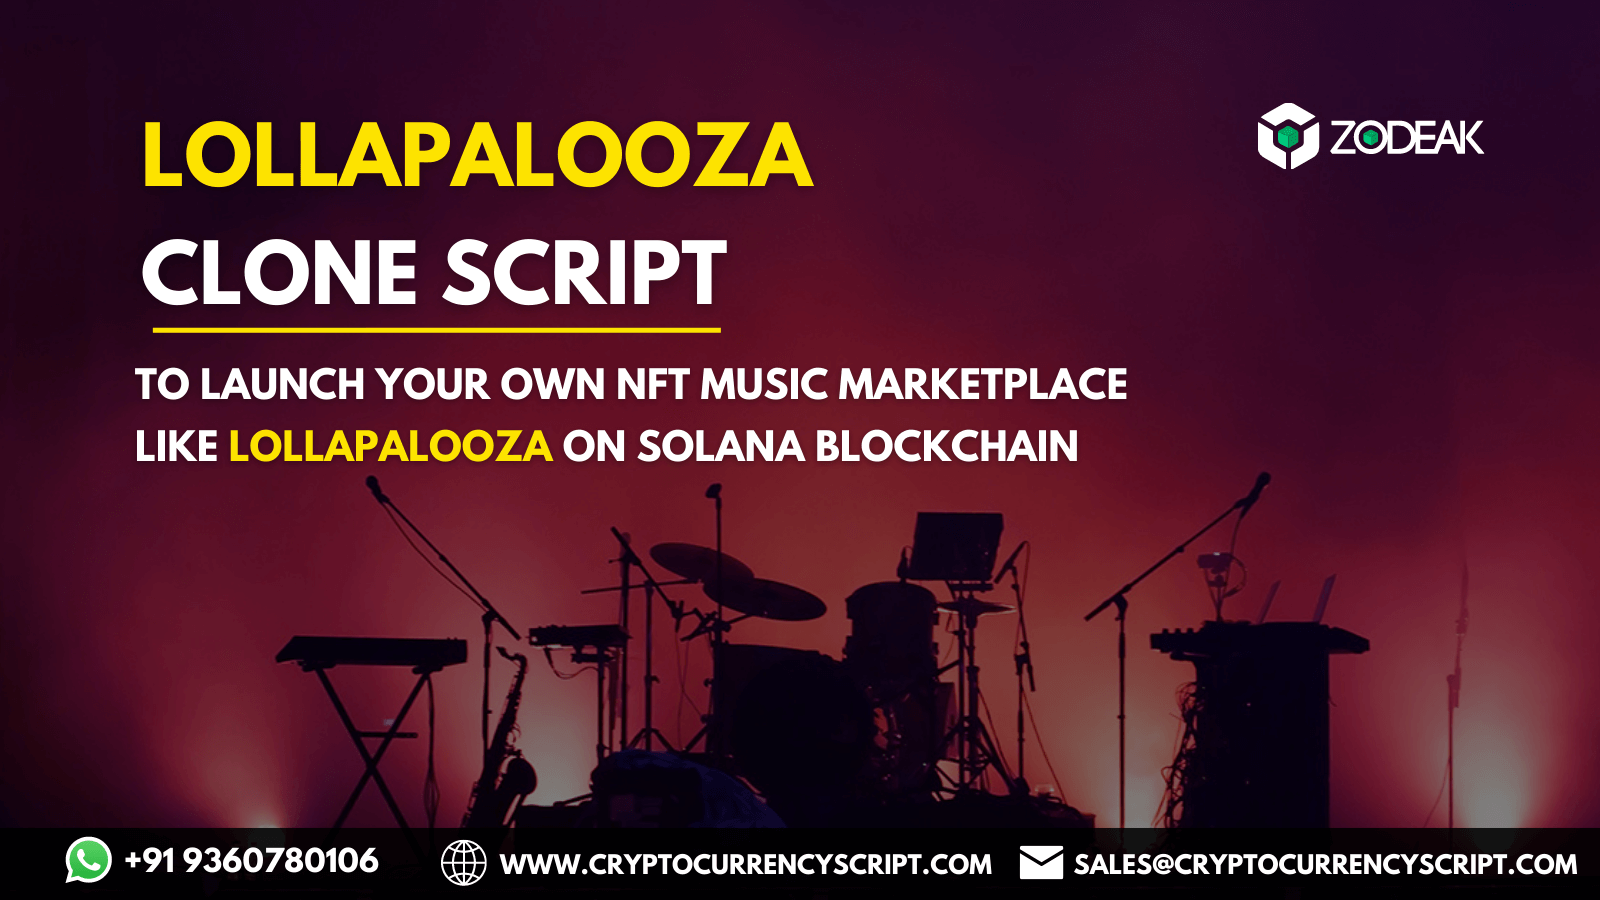 Lollapalooza Clone script | To Launch NFT Music Marketplace Like Lollapalooza